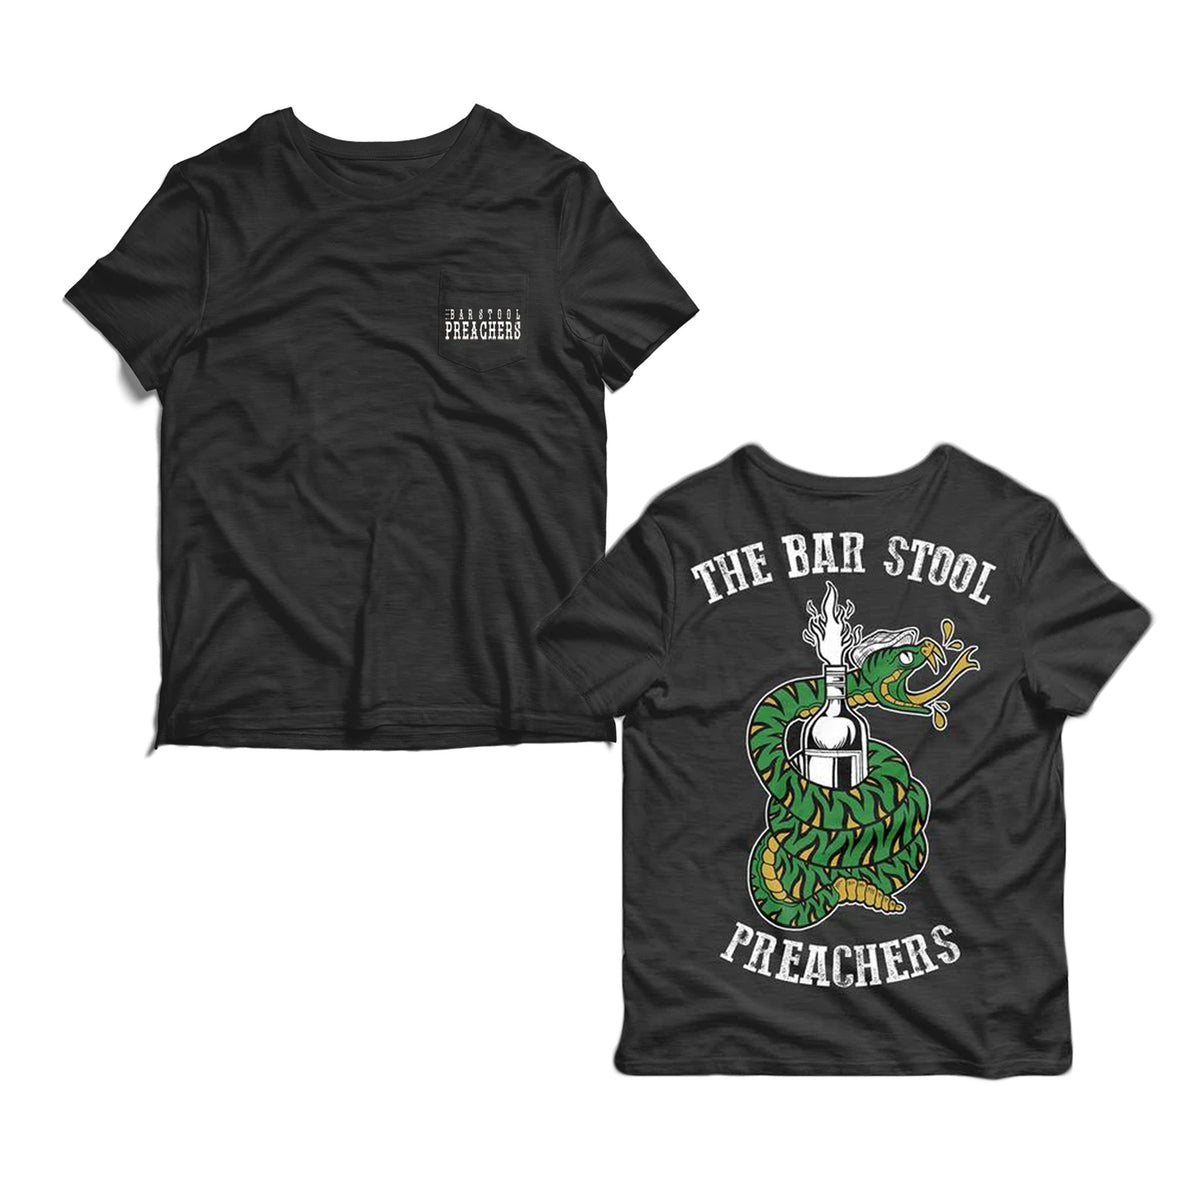 The Bar Stool Preachers - Snake Logo - Black - Pocket T-Shirt